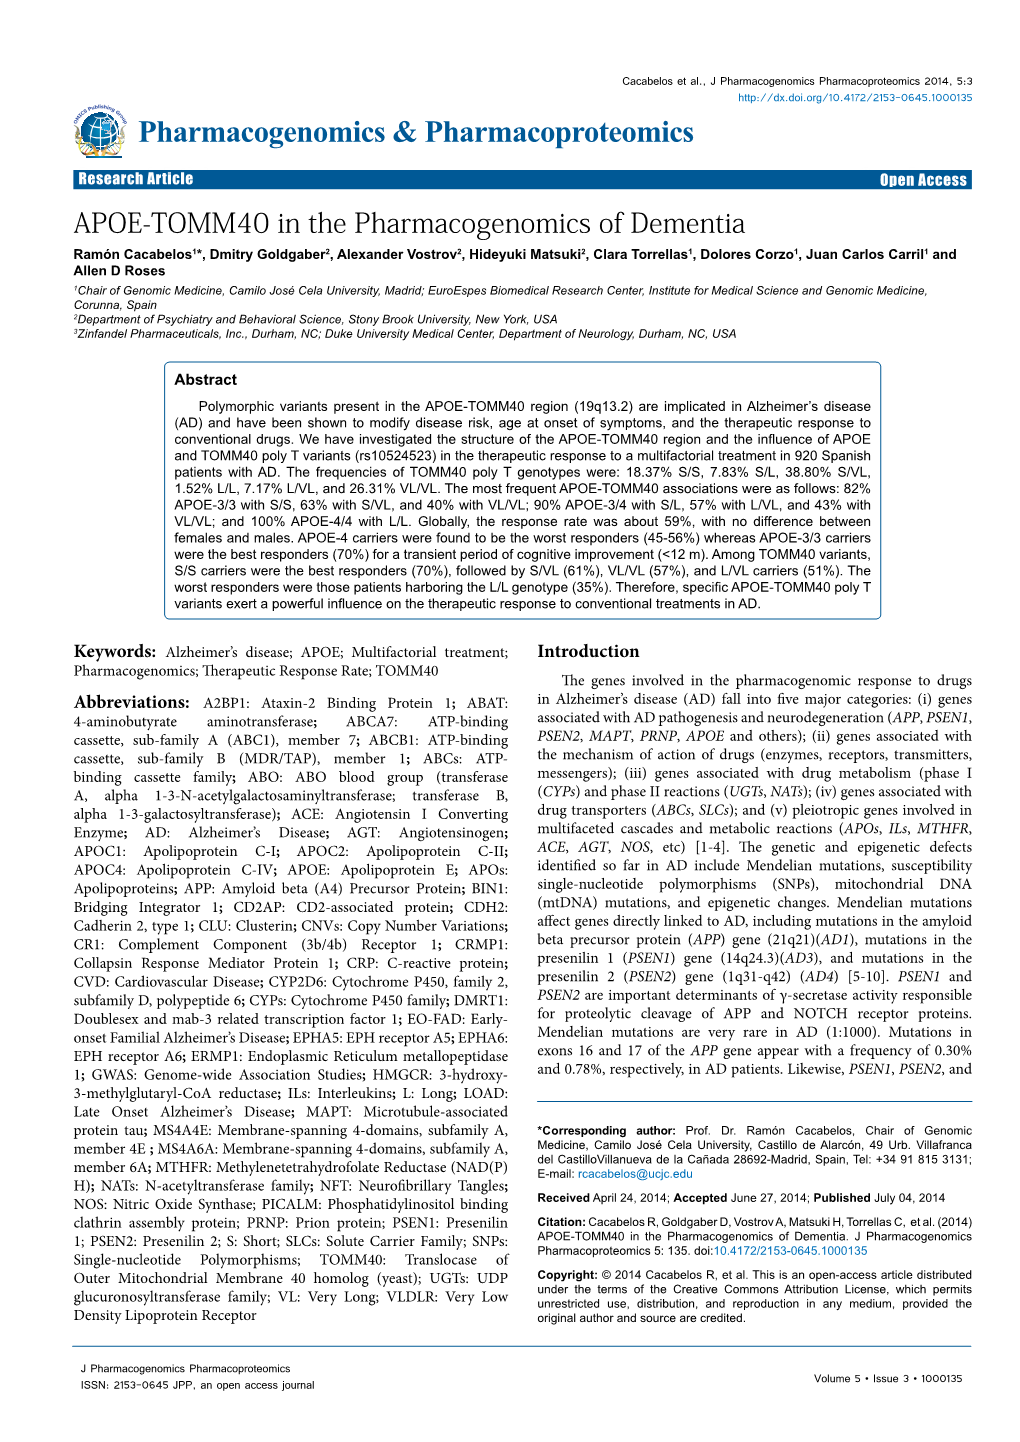 APOE-TOMM40 in the Pharmacogenomics of Dementia